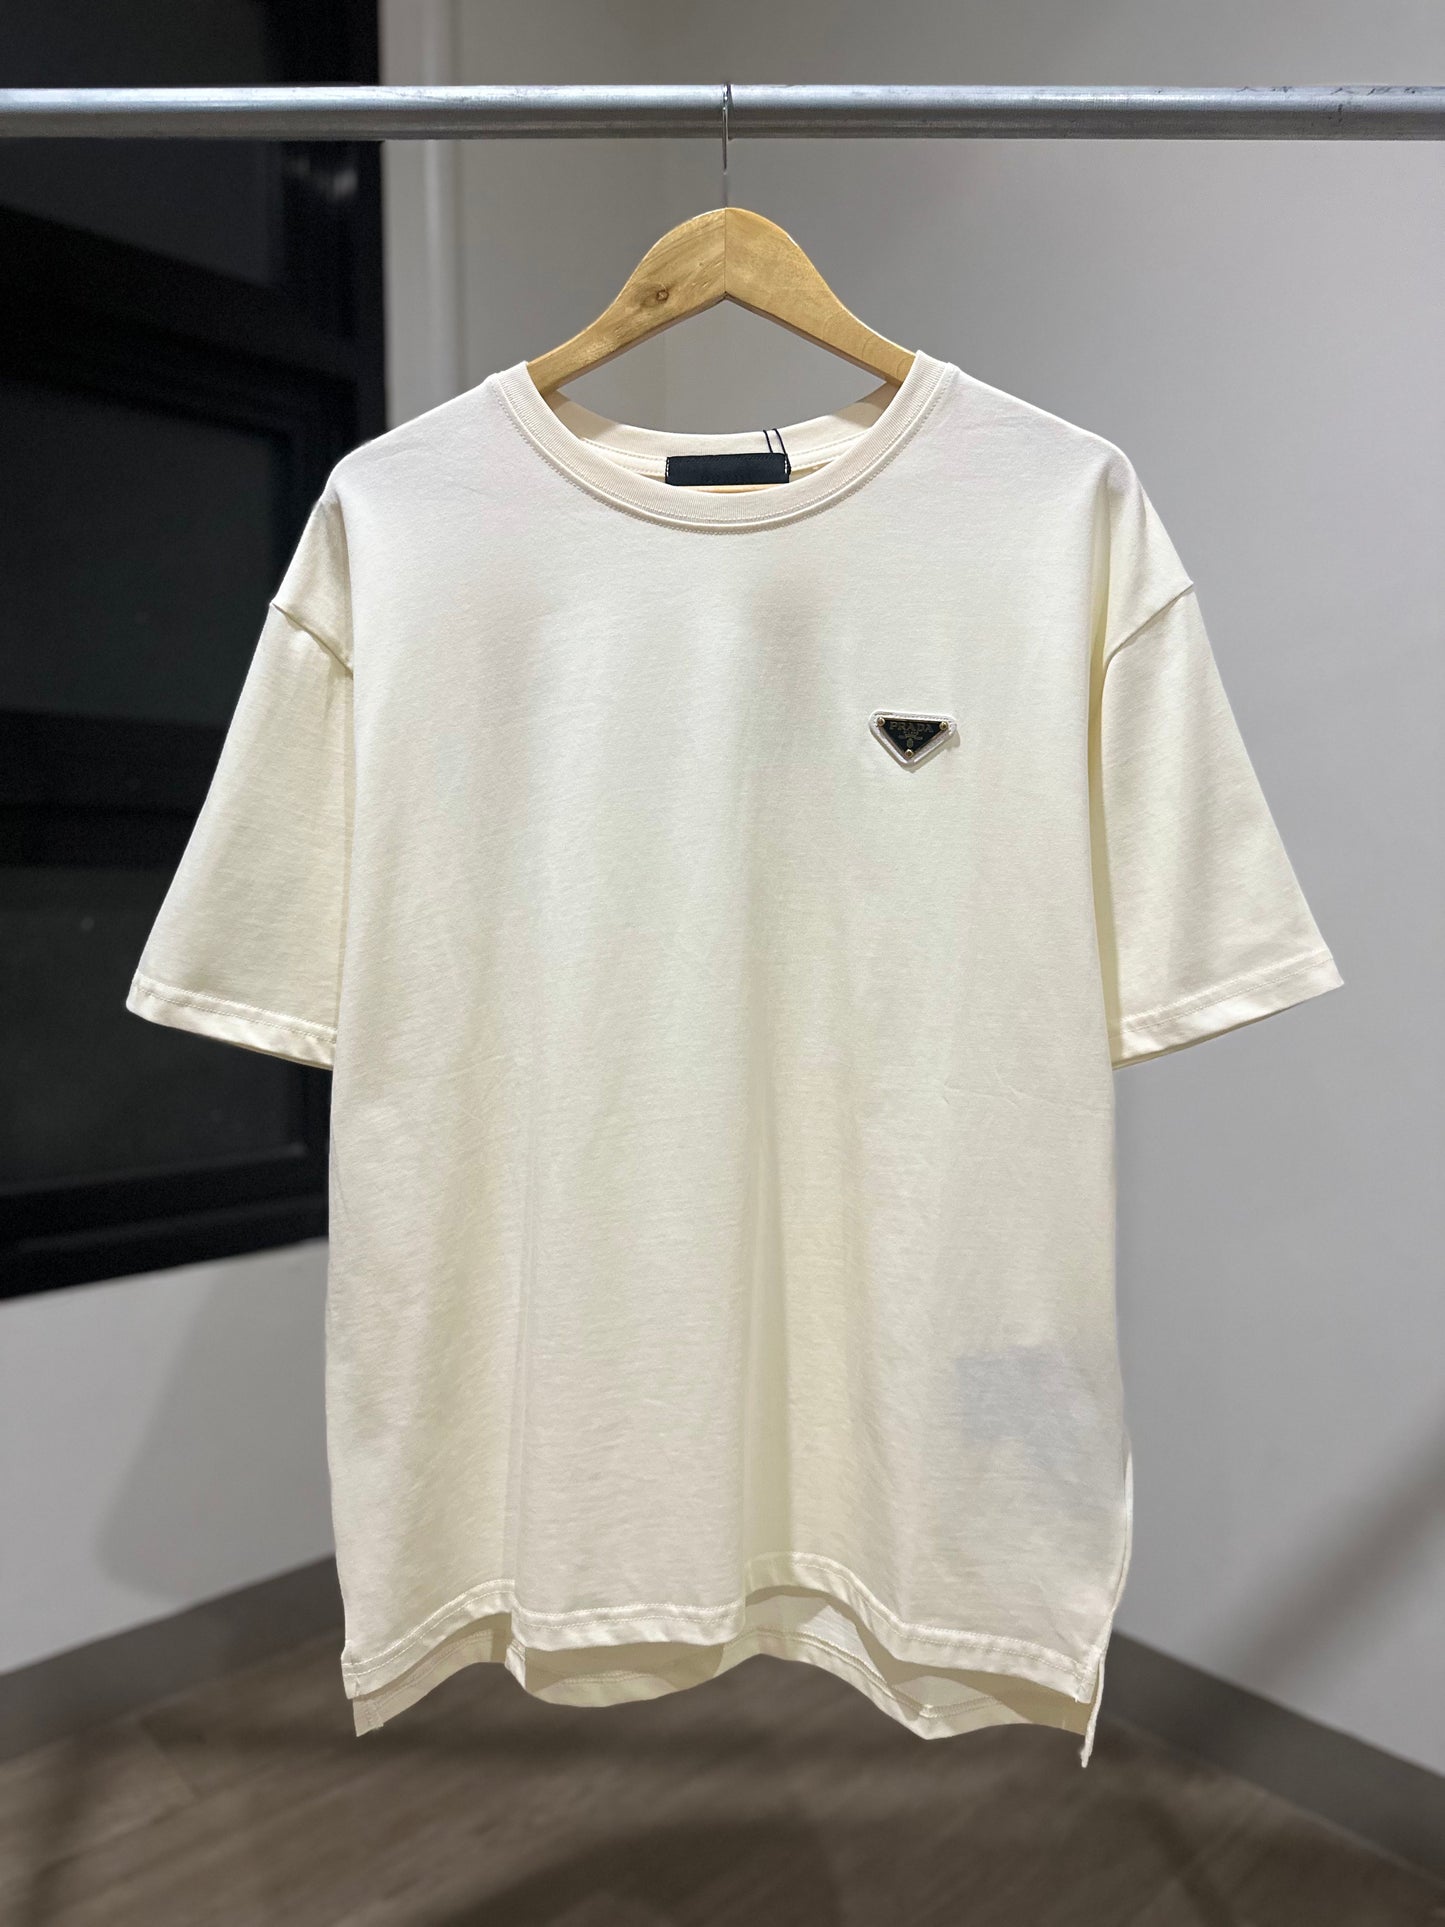 Prada Cotton T-Shirt (Cream/Apricot)